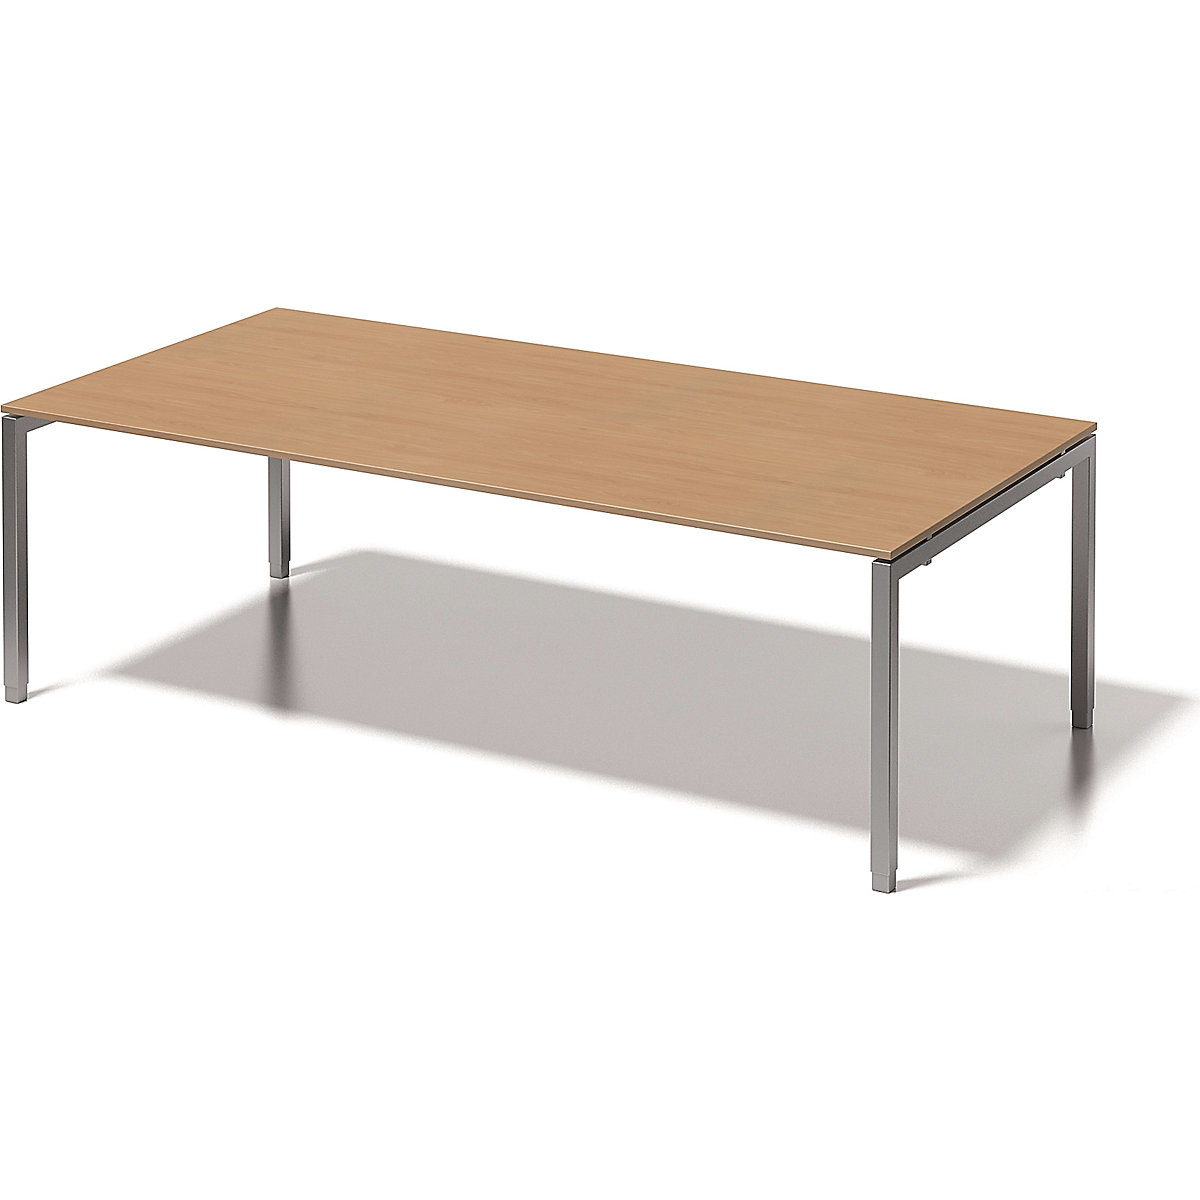 CITO desk, U-frame – BISLEY, HxWxD 650 – 850 x 2400 x 1200 mm, silver frame, beech tabletop-4